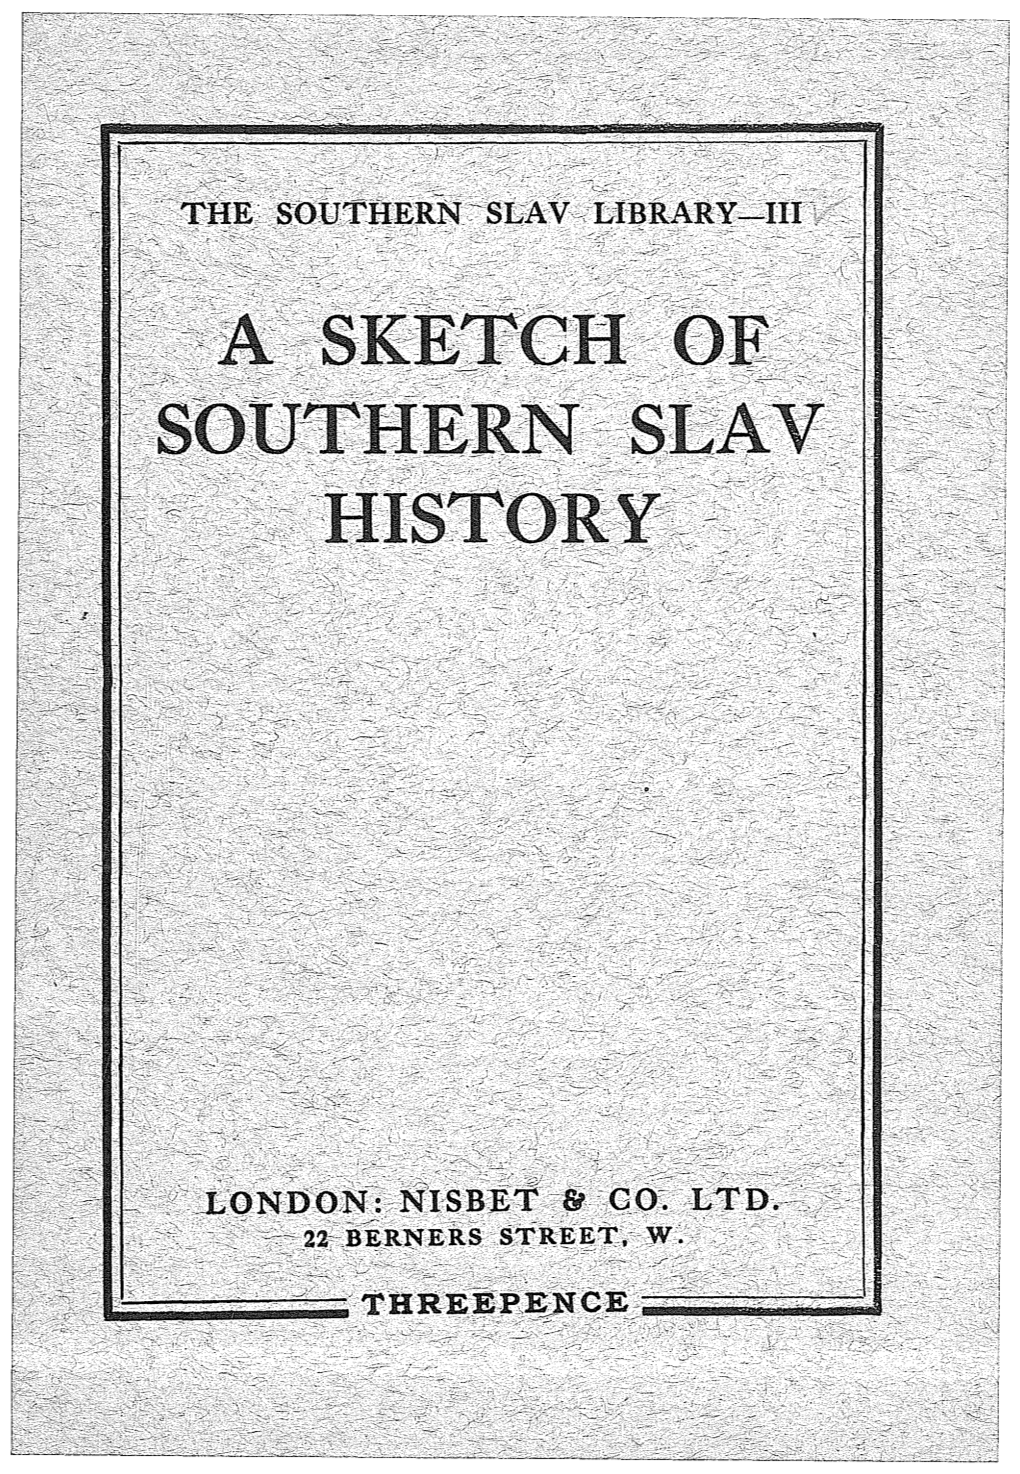 A Sketch of Southern Slav History